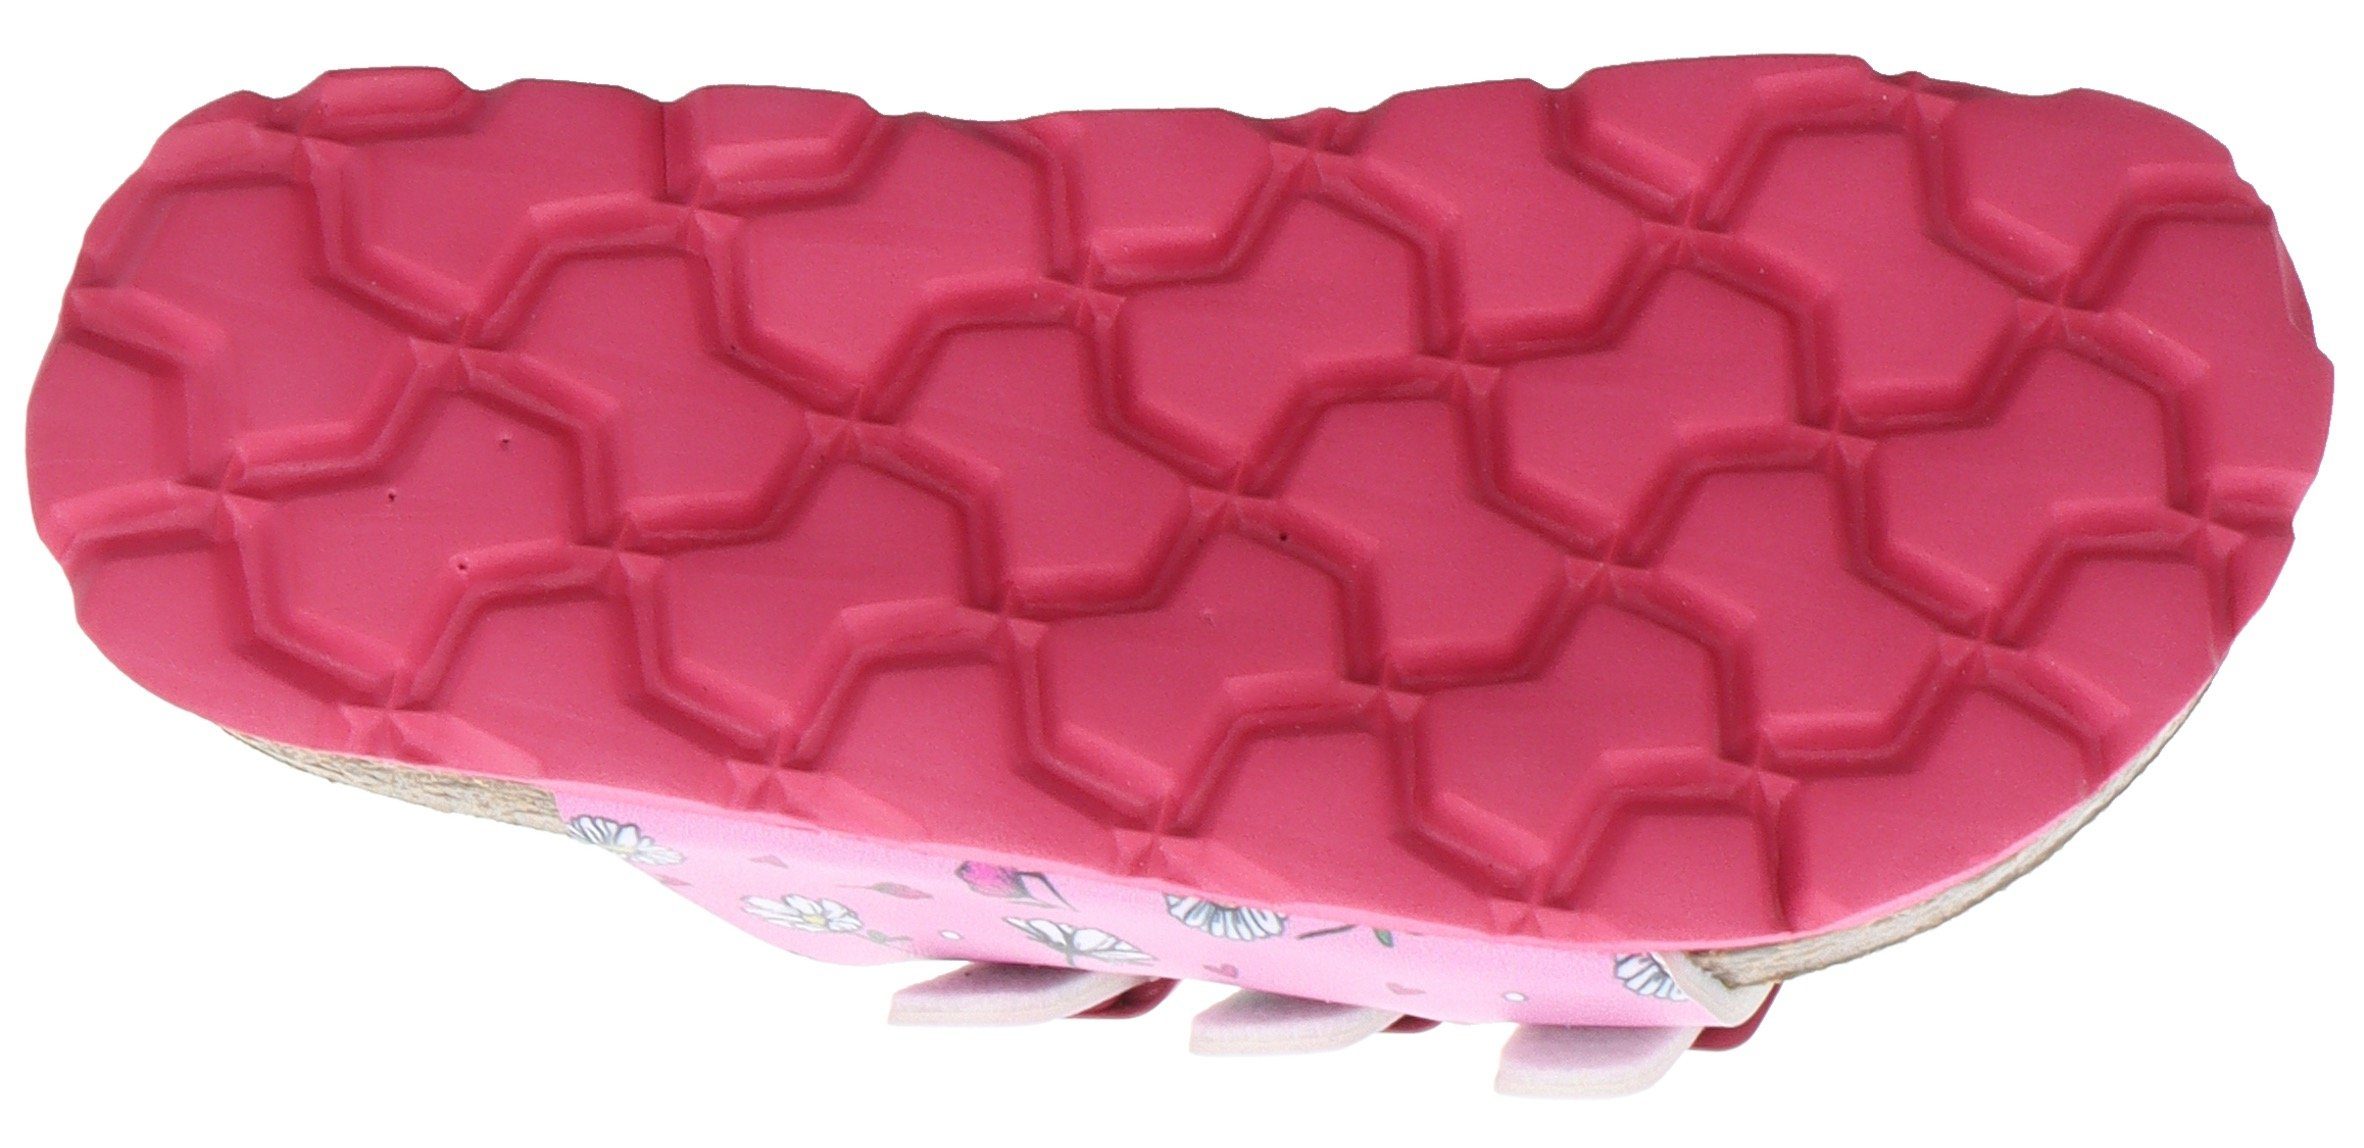 Superfit Fußbettpantolette WMS: Mittel Hausschuh allover rosa-pink Print mit